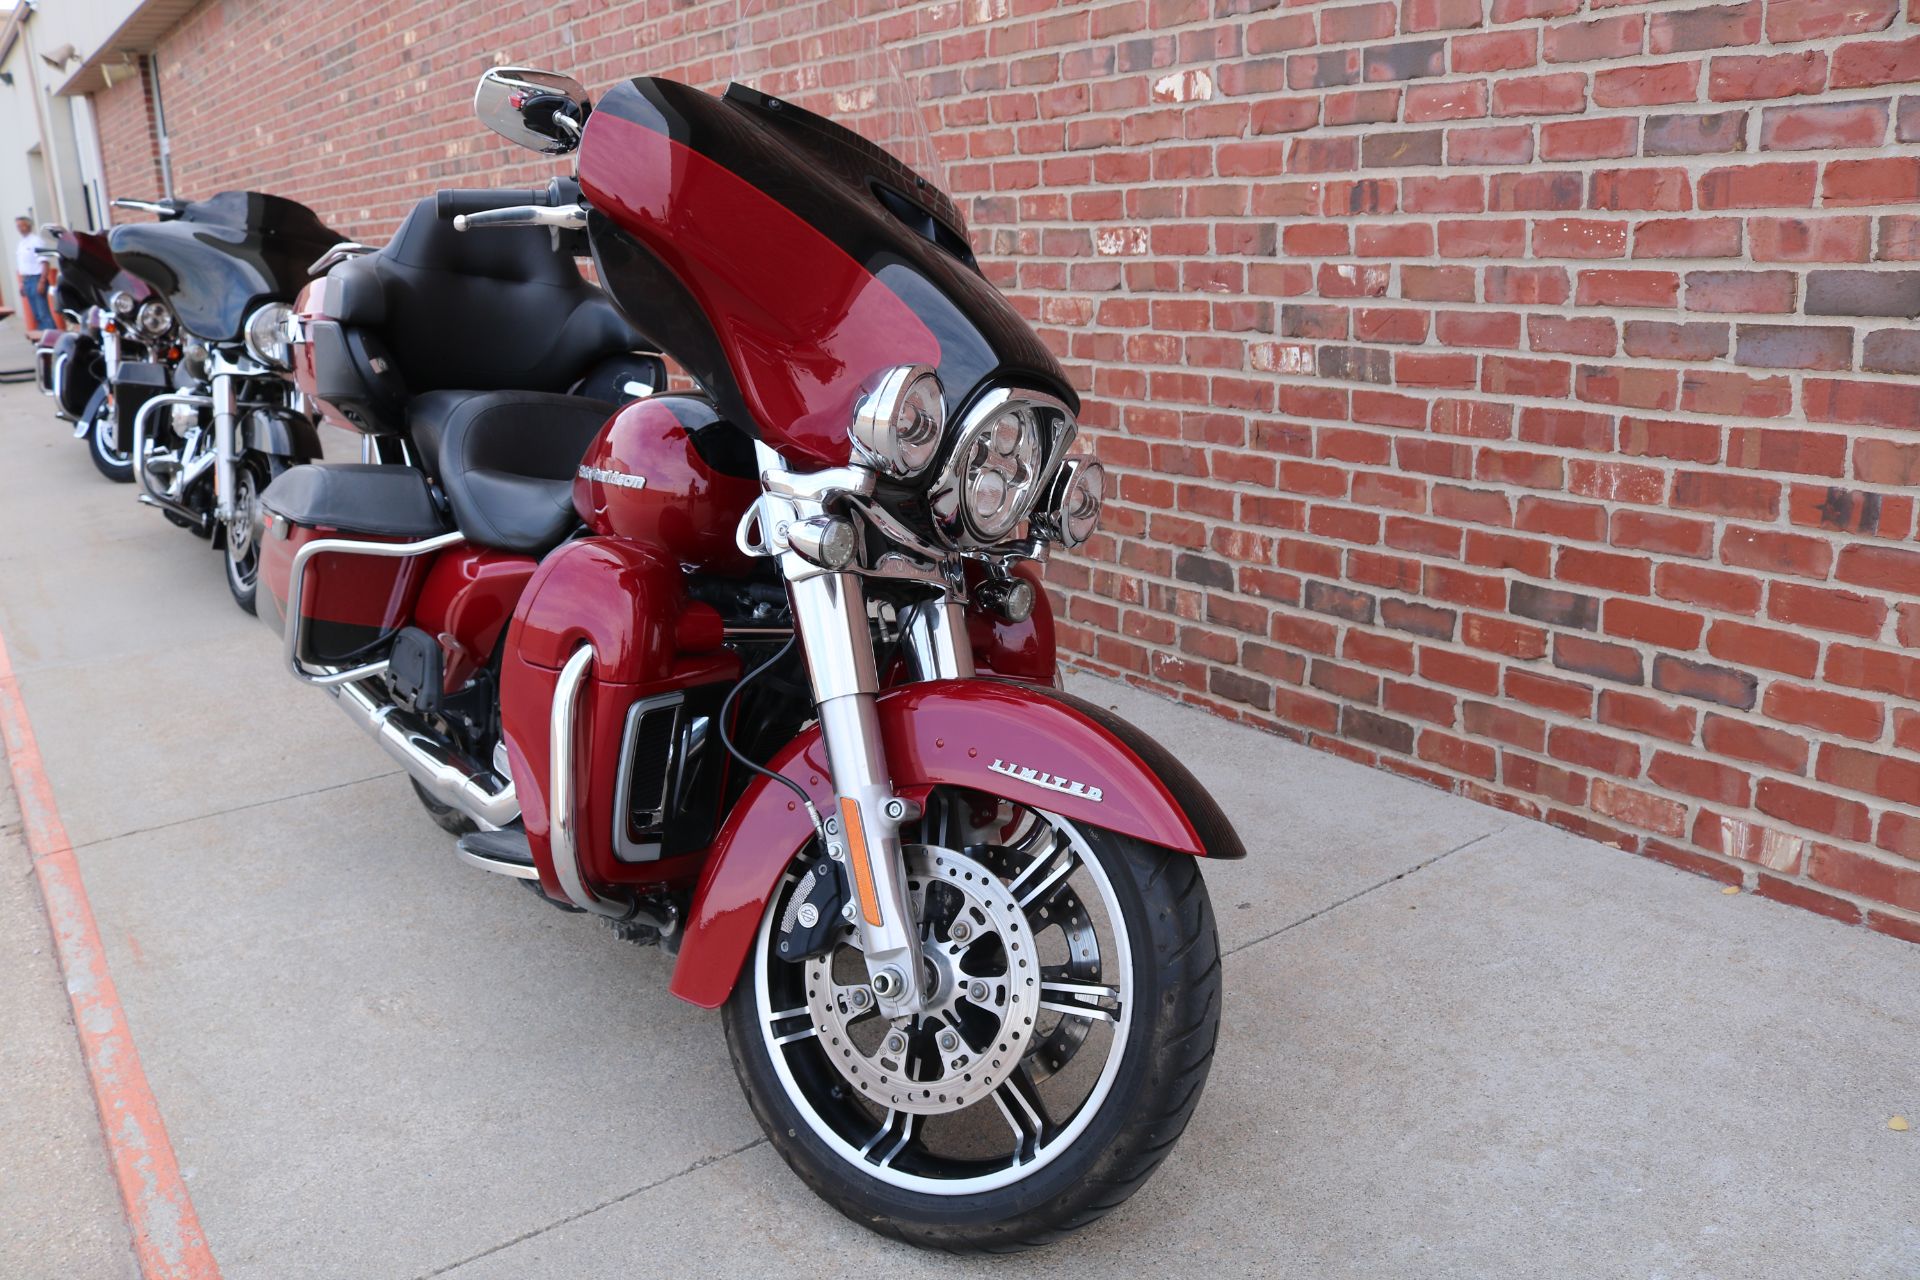 2021 Harley-Davidson Ultra Limited in Ames, Iowa - Photo 6